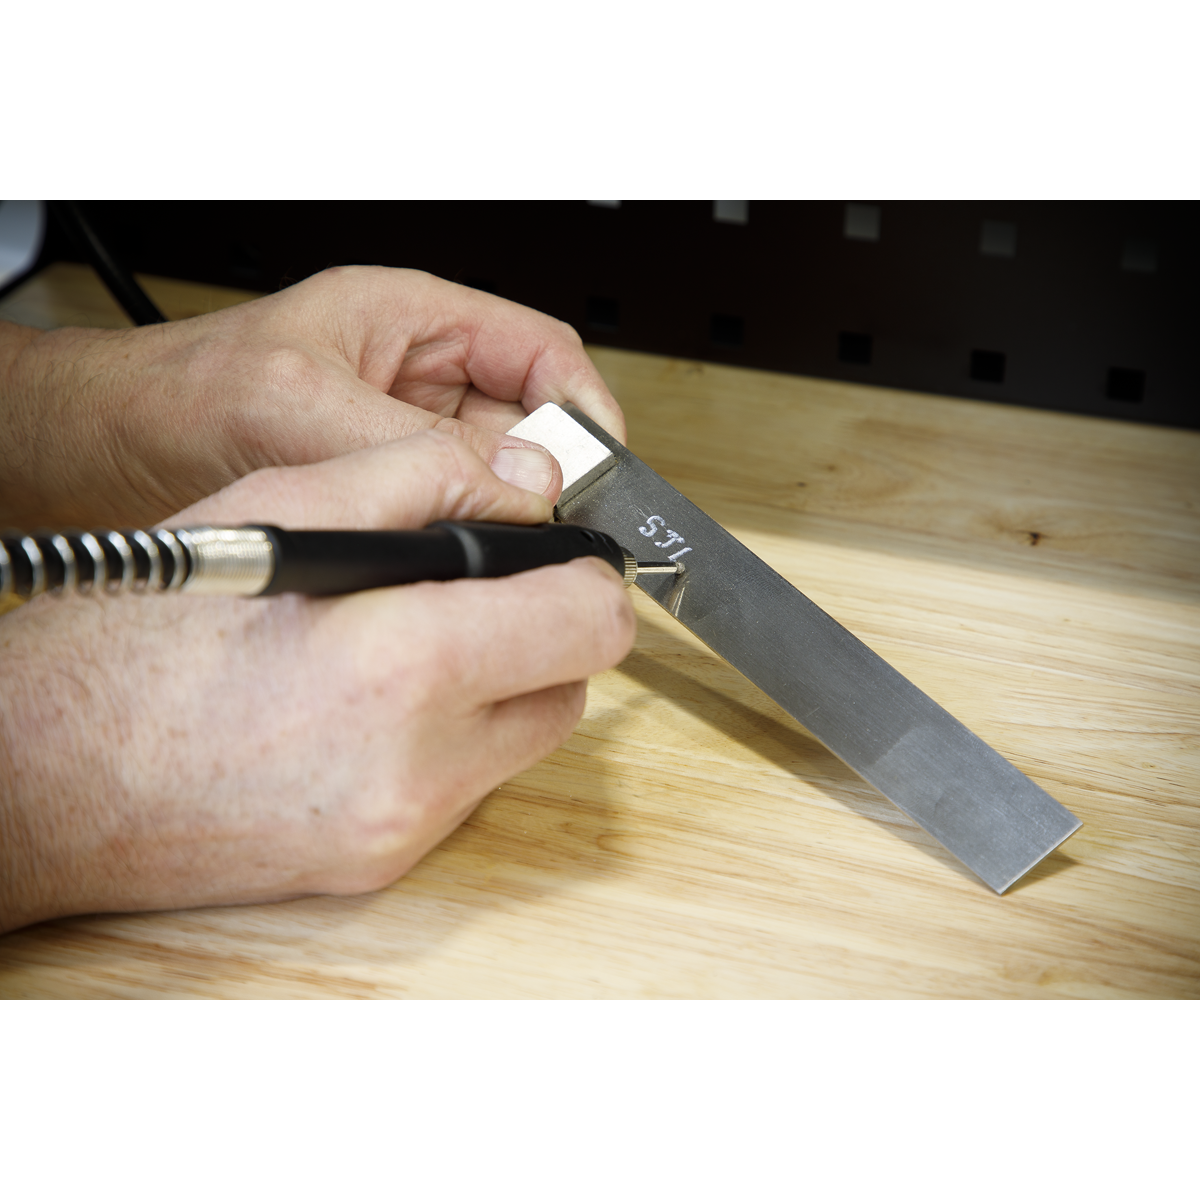 Multipurpose Rotary Tool & Engraver Kit 40pc 230V